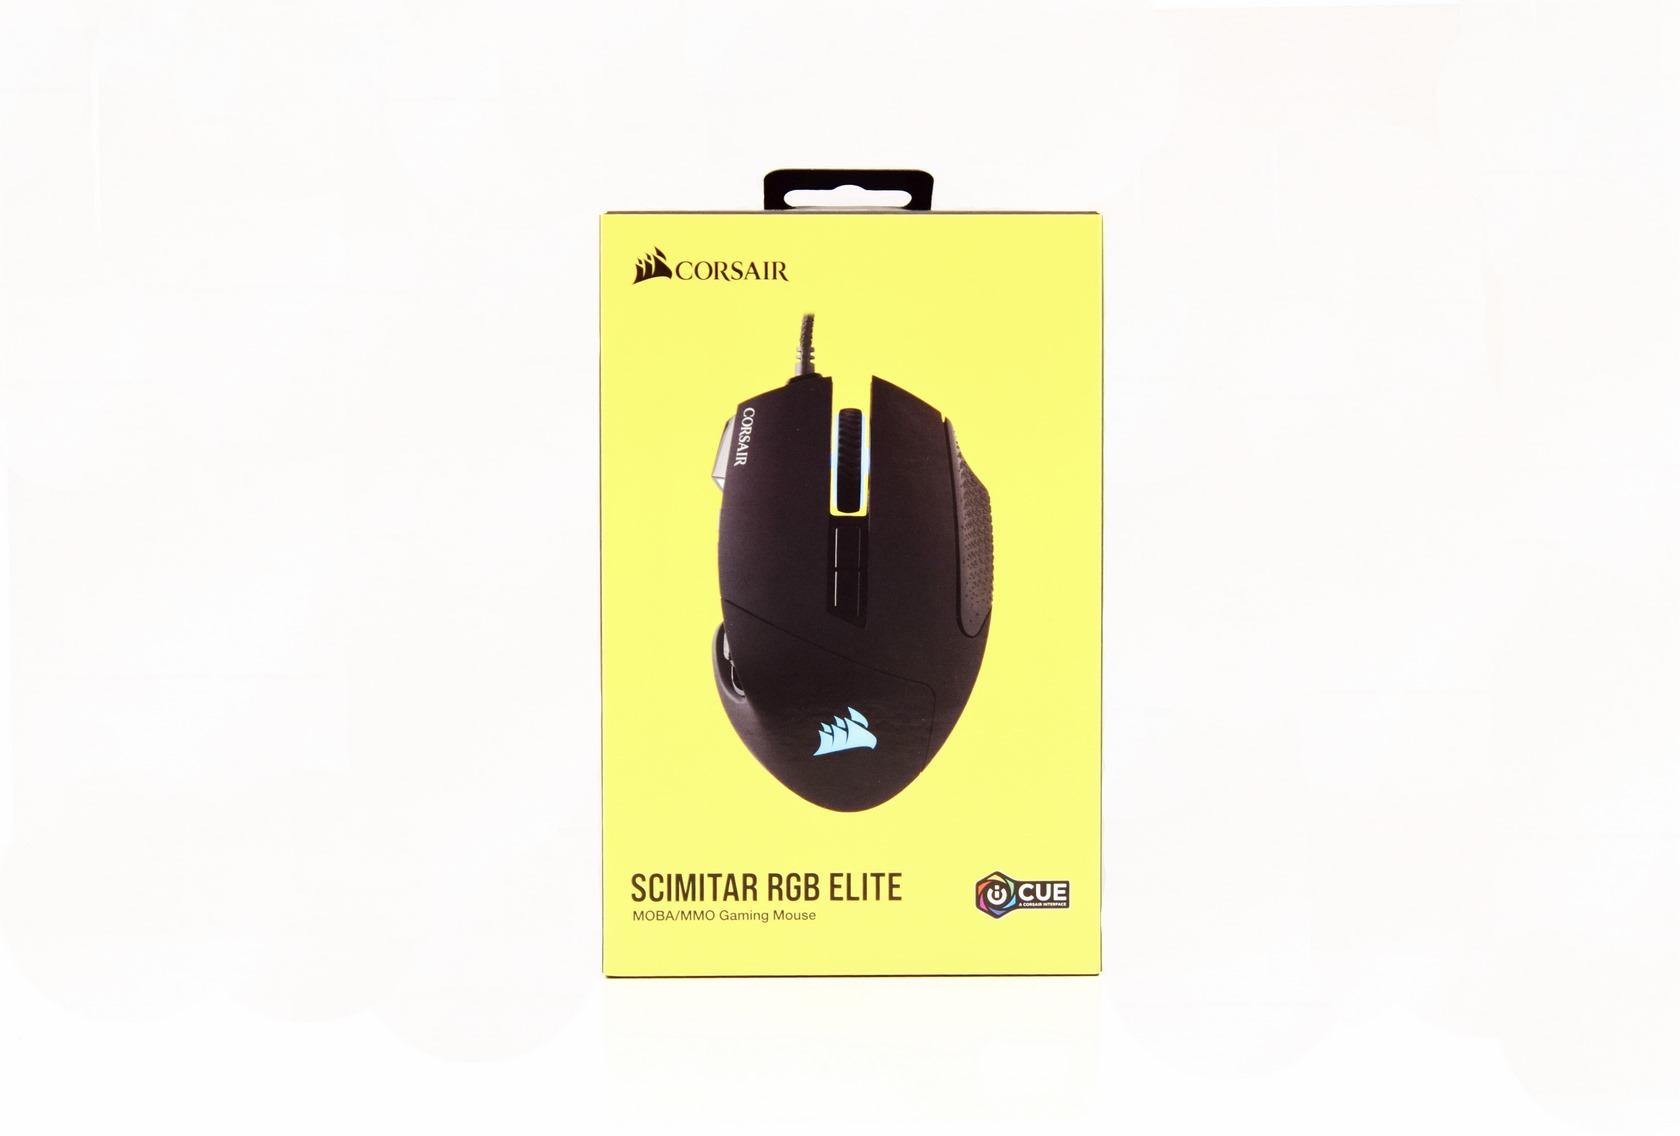 CORSAIR Scimitar RGB Gaming MOBA/MMO Elite Review Mouse